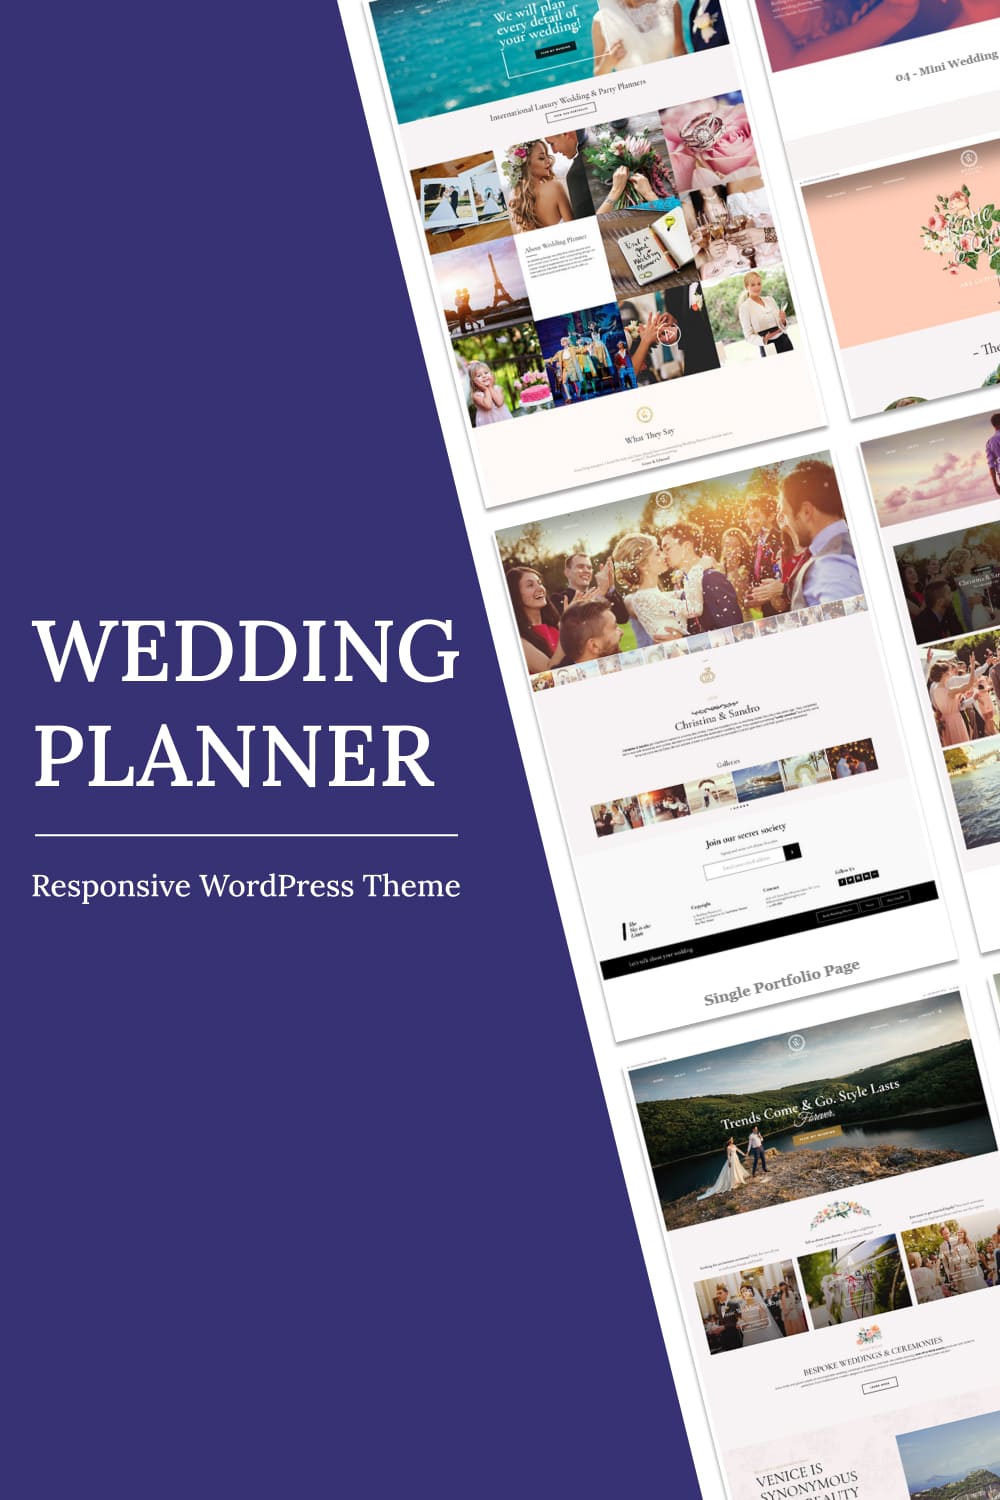 Wedding Planner - Responsive WordPress Theme.